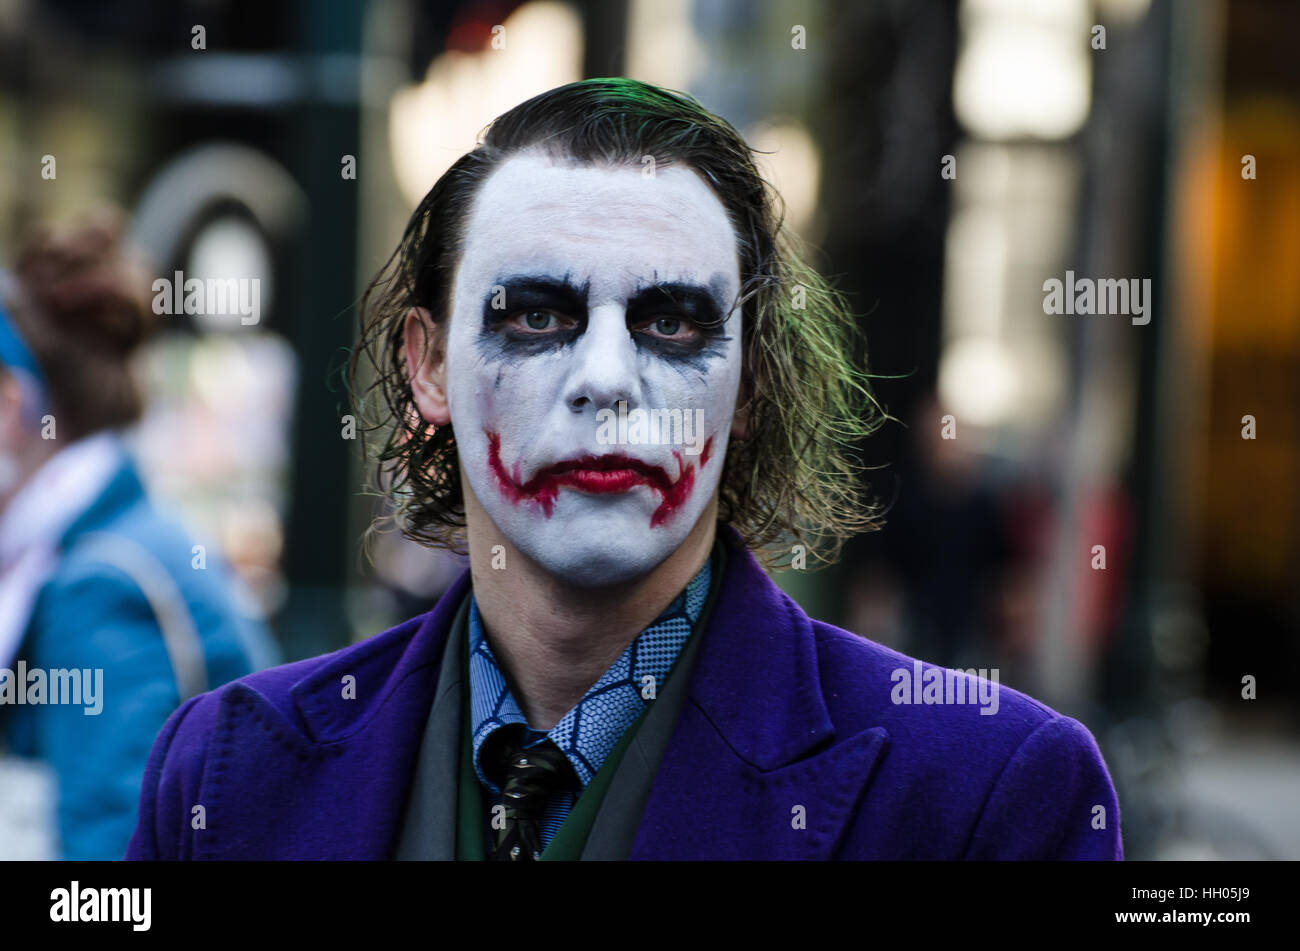 Calgary, Alberta, Canada - April 17 2015: The Joker Dark Knight version posing at the Calgary Comic an Entertainment Expo Parade Stock Photo